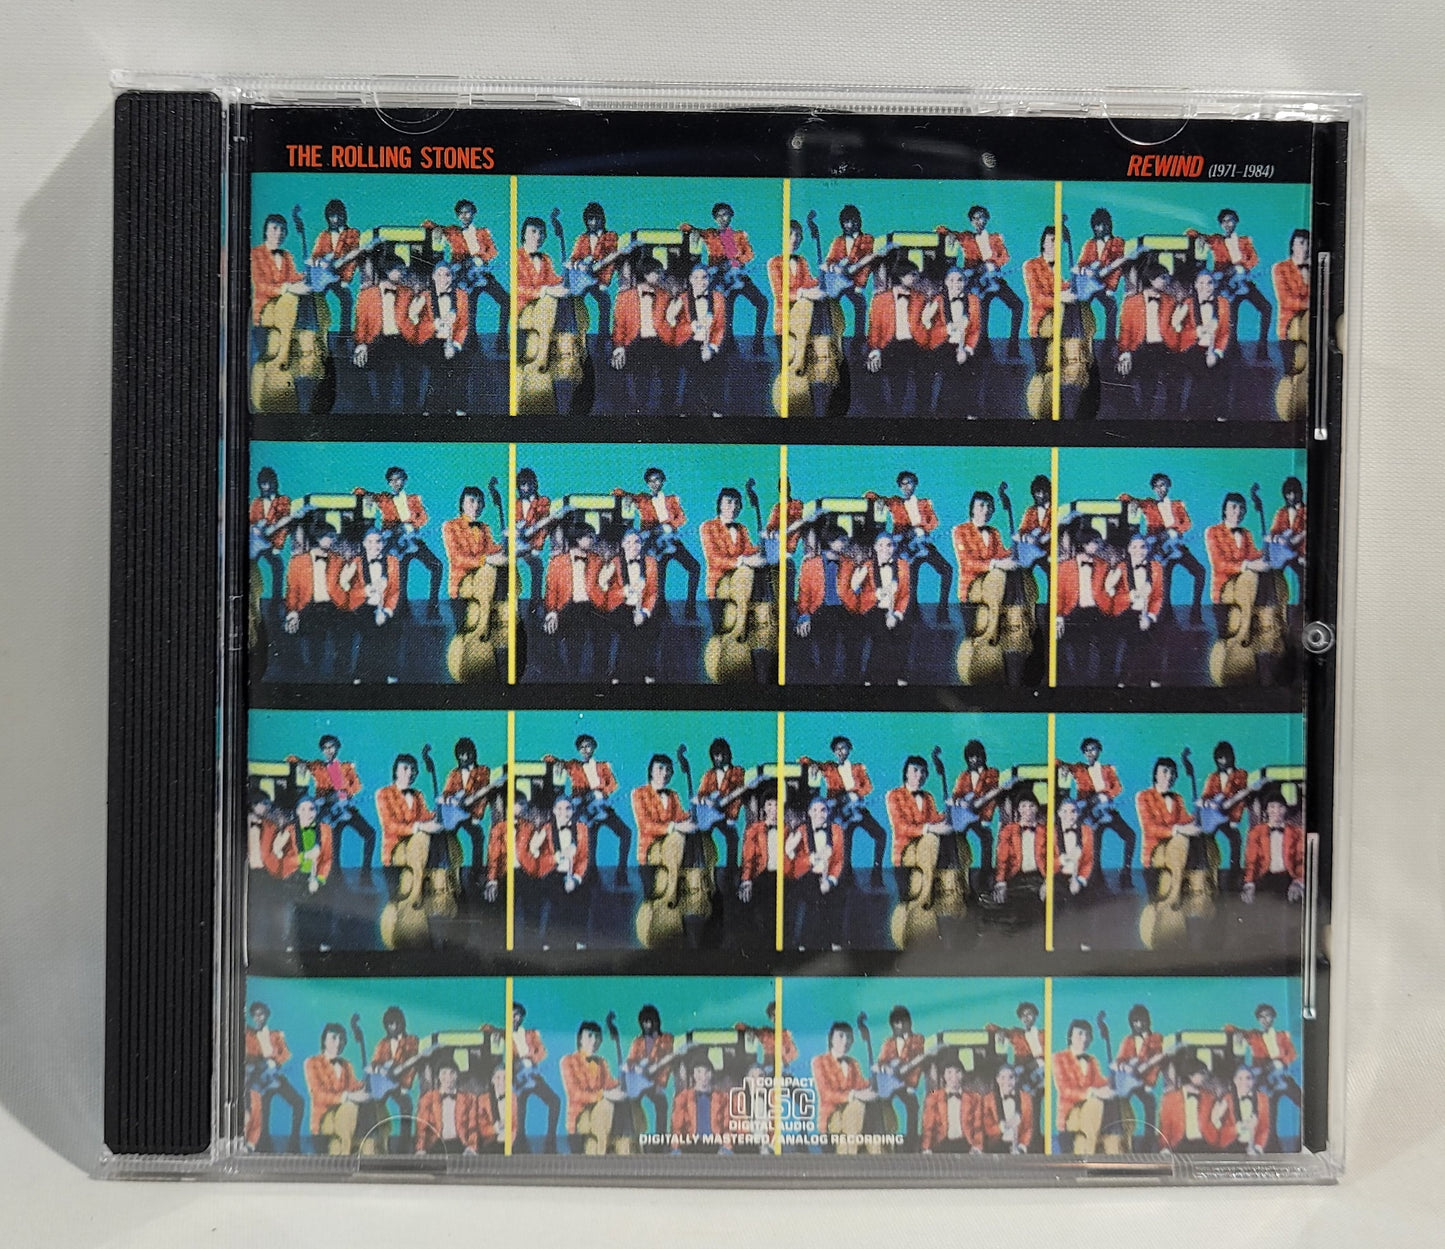 The Rolling Stones - Rewind (1971-1984) [CD]